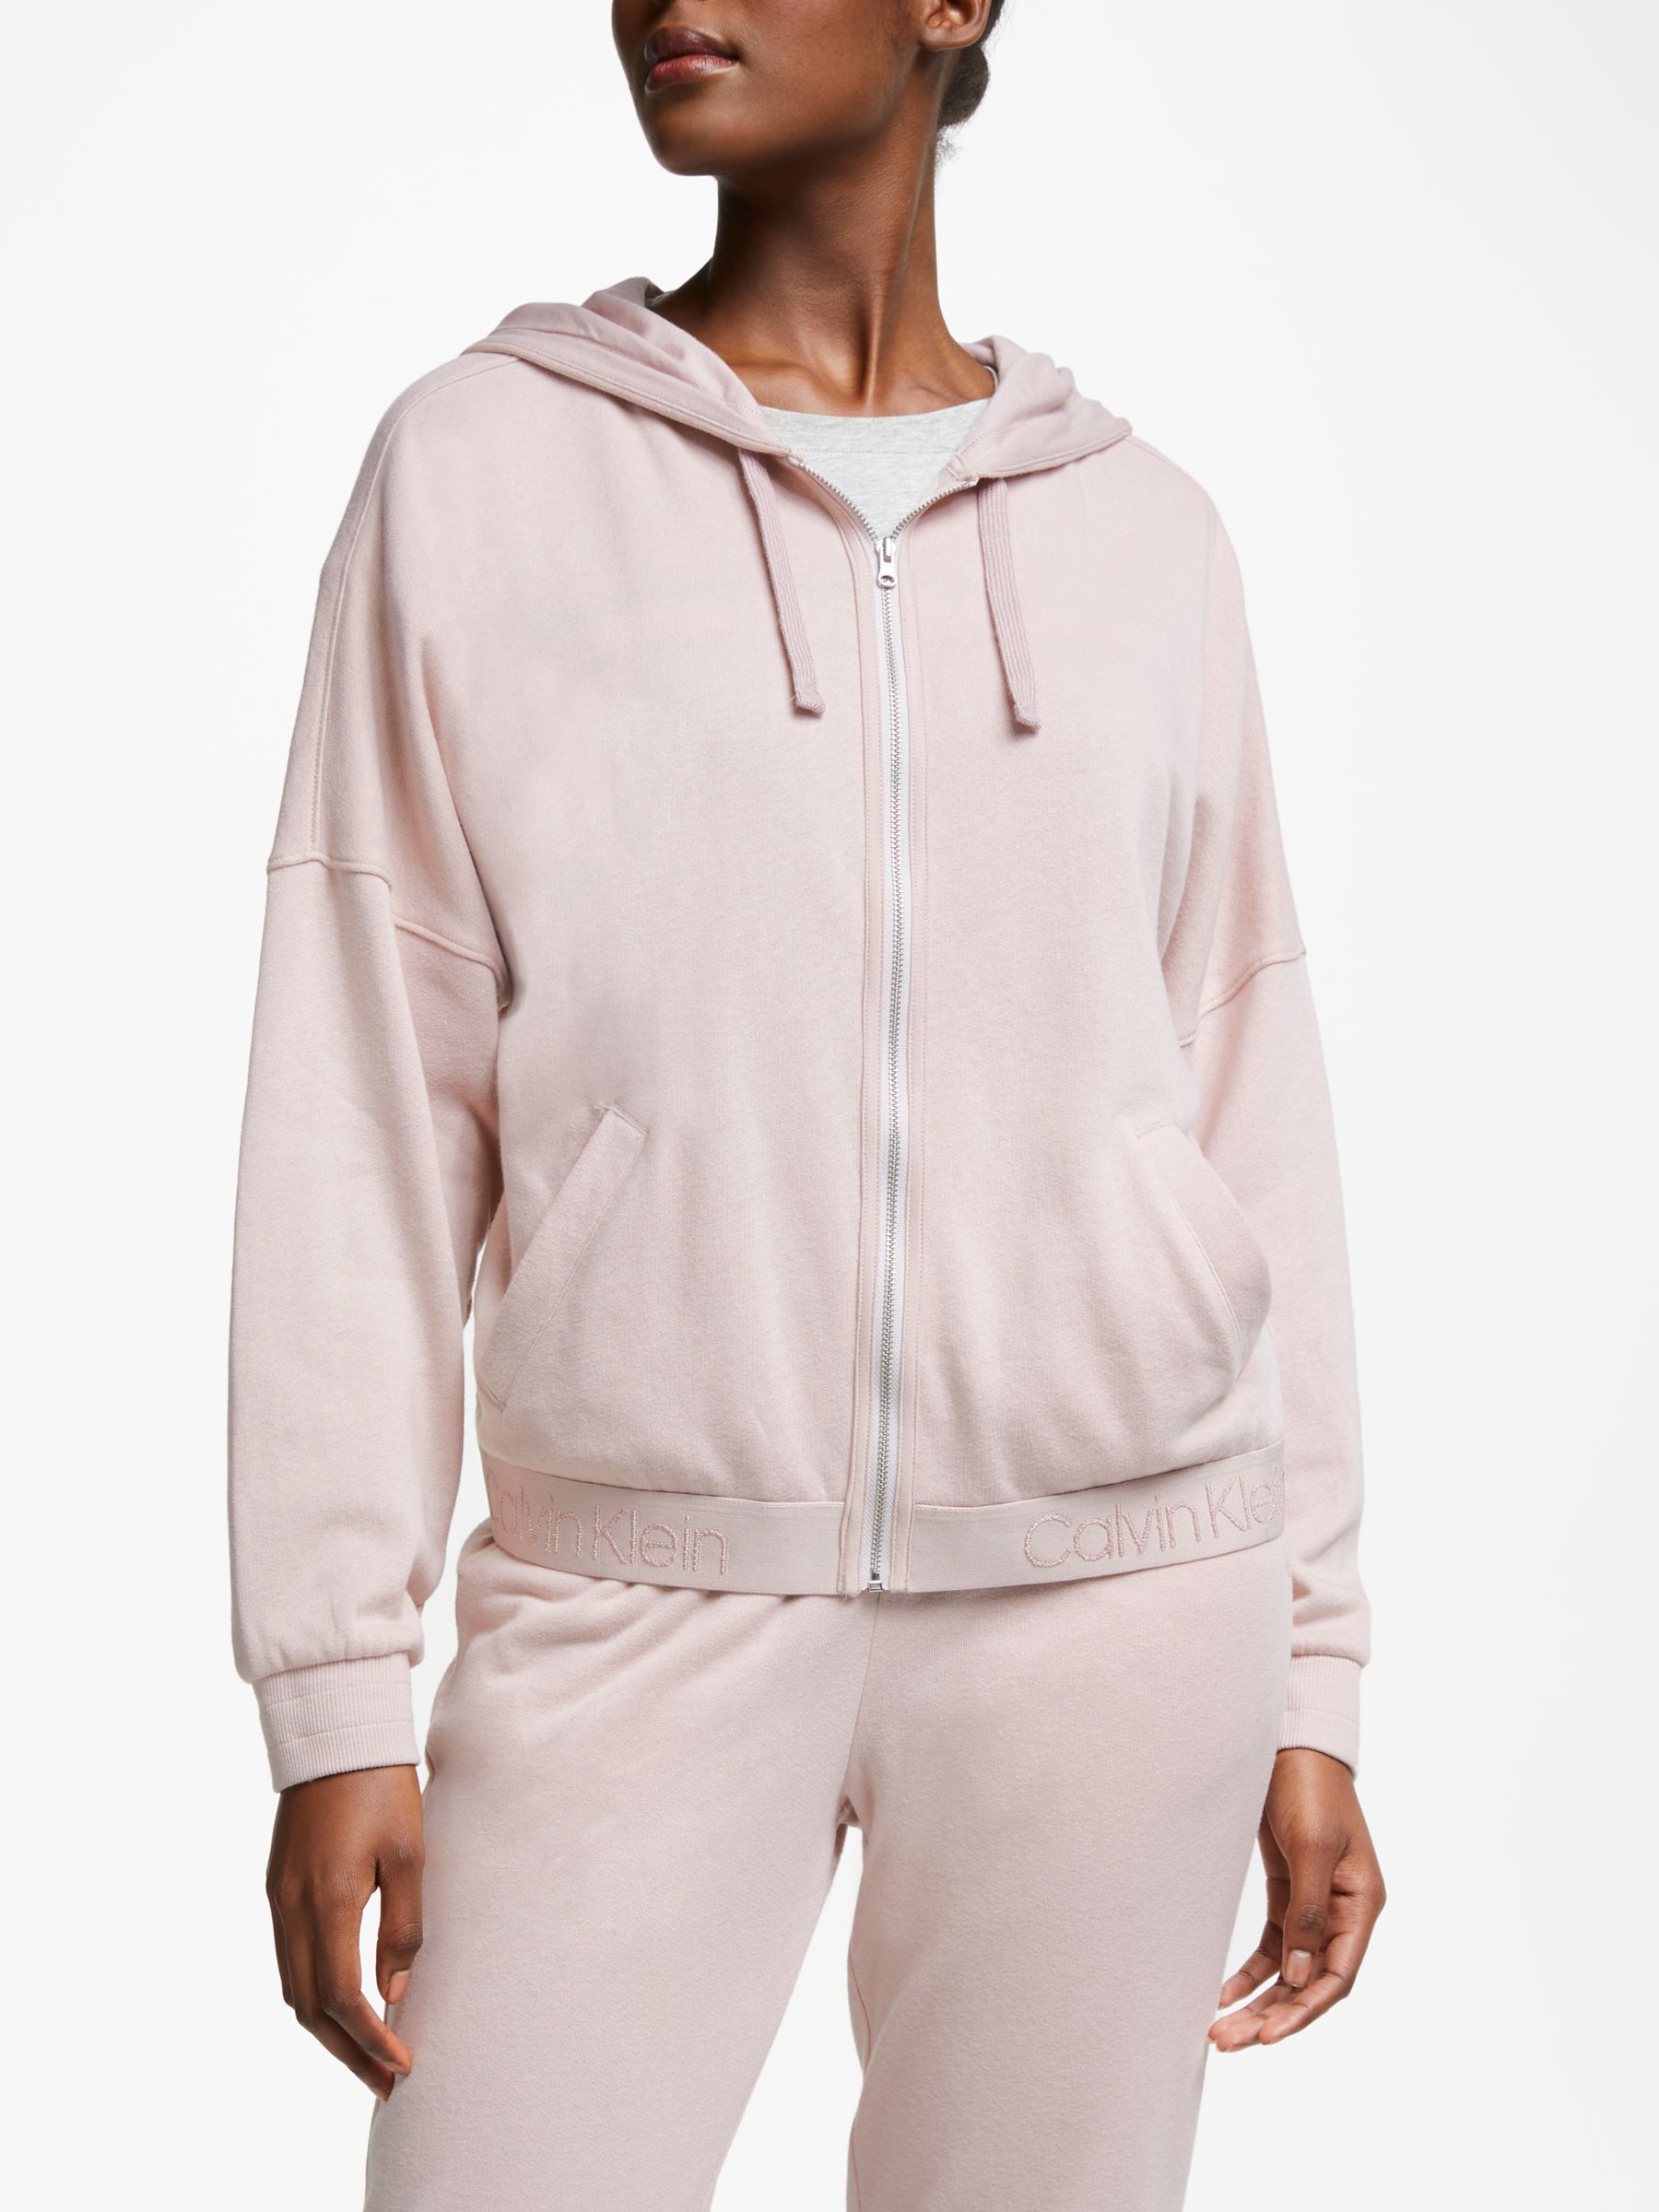 Calvin Klein Tonal Logo Zipped Hoodie, Nude Pink